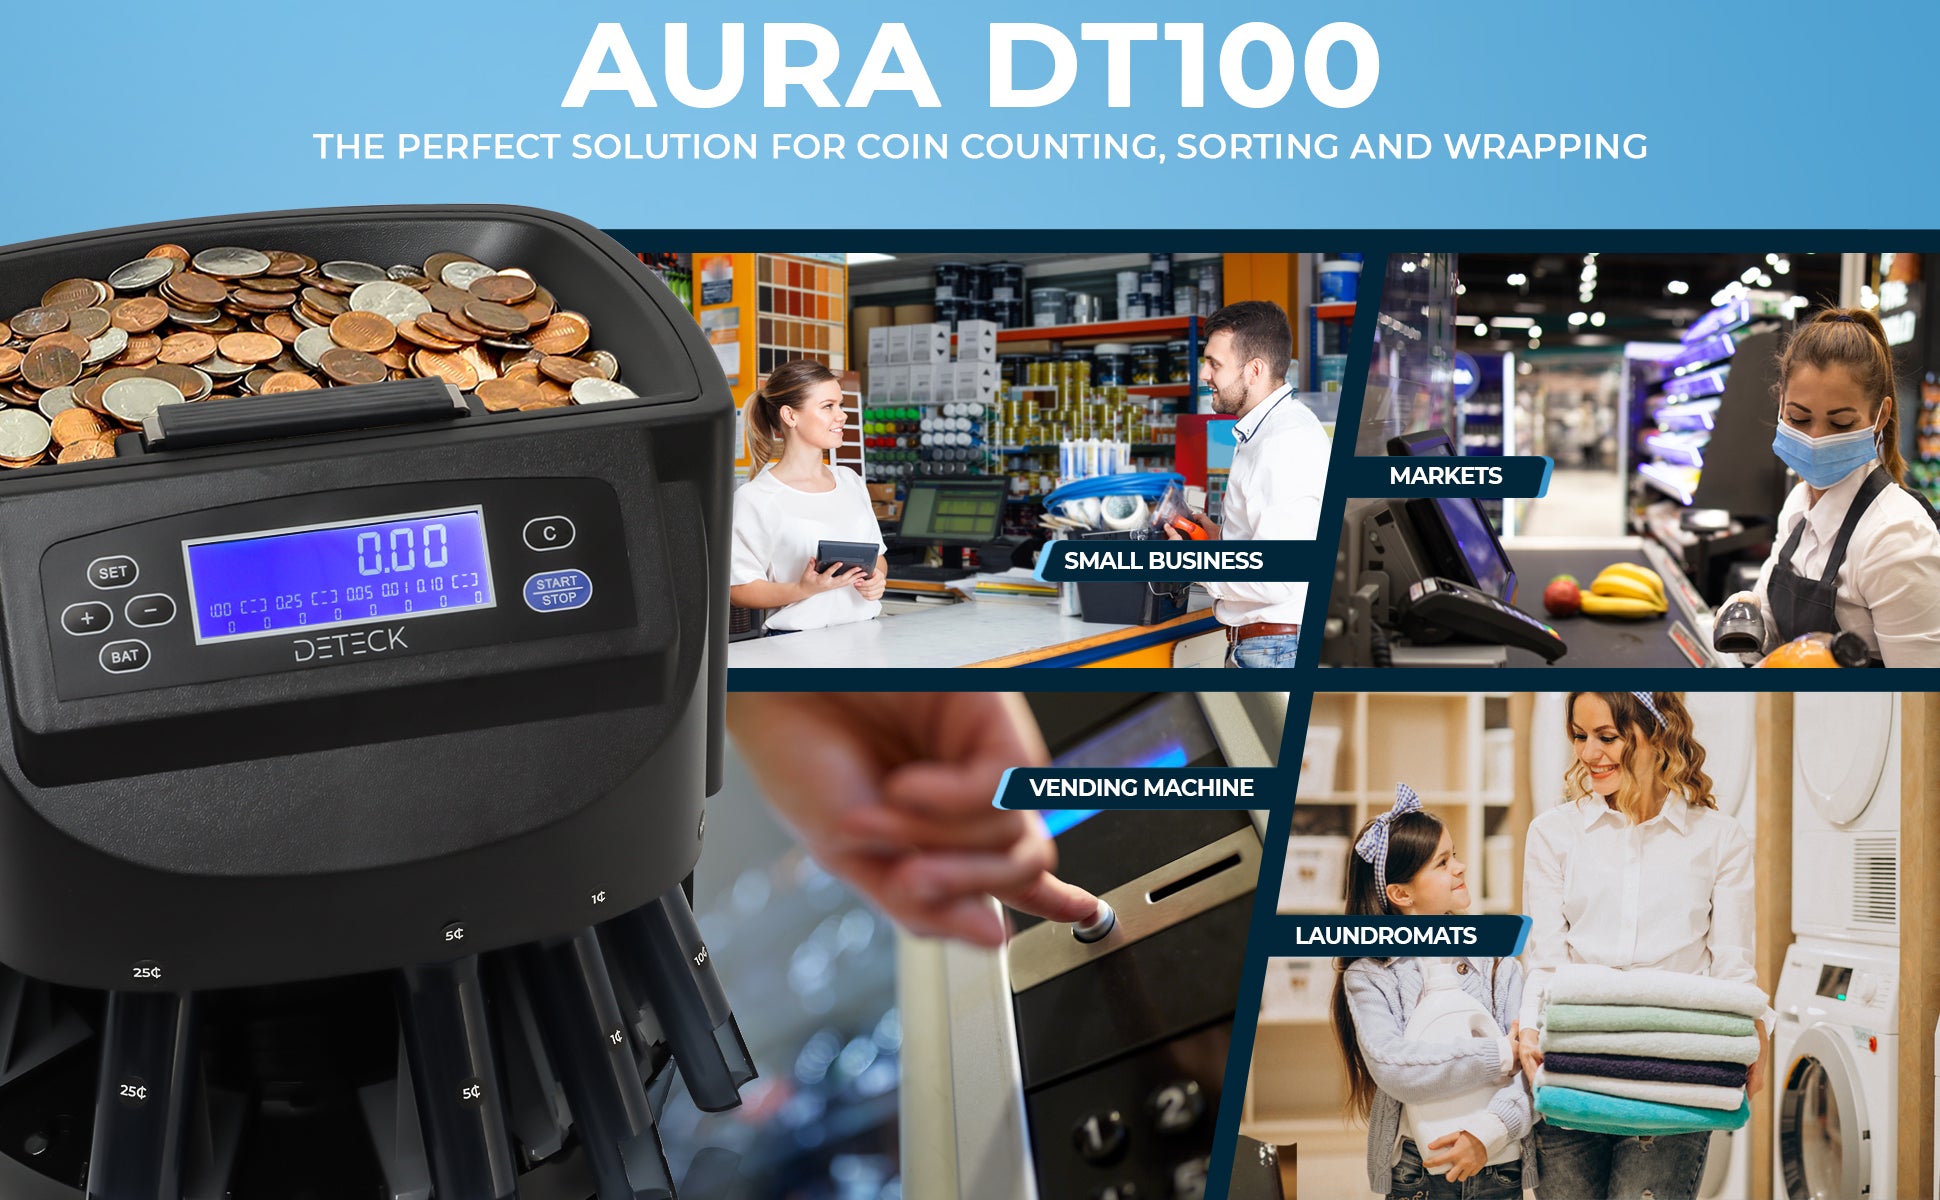 AURA DT100 Coin Counter Machine – Deteck USA